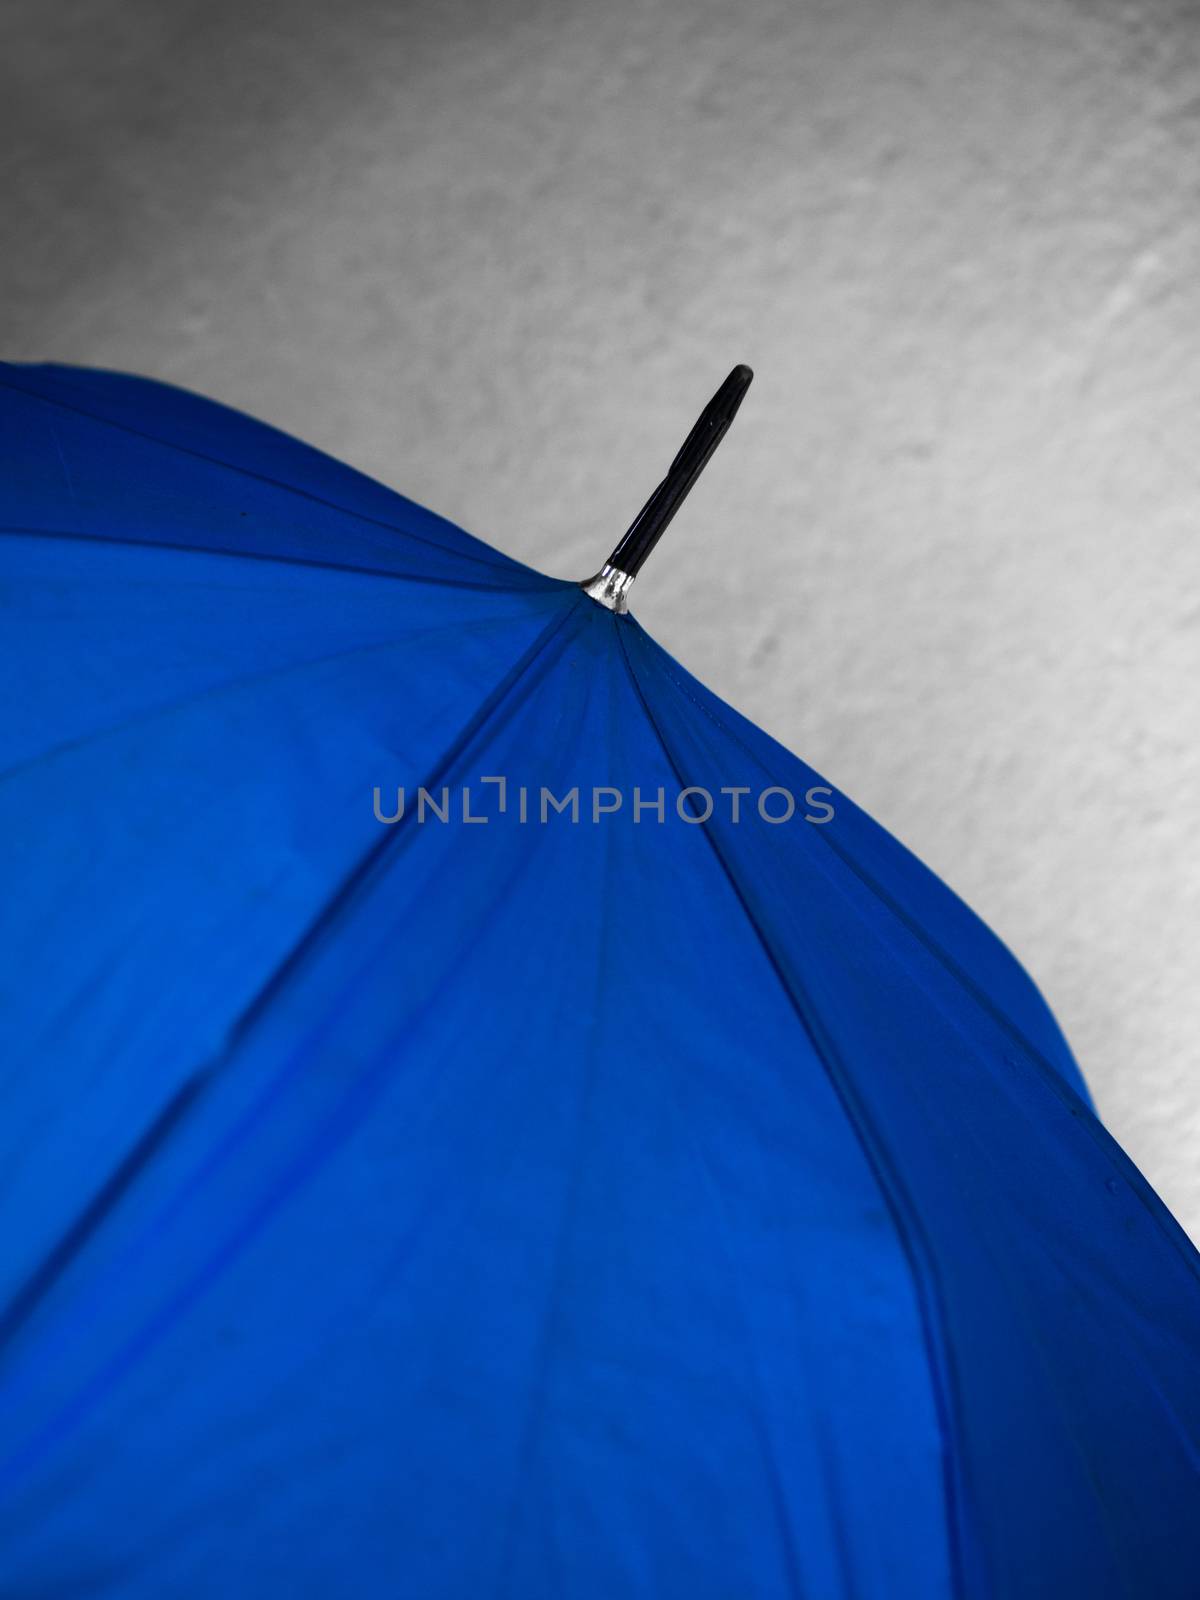 COLOR PHOTO OF CLOSE-UP OF BLUE COLOR UMBRELLA